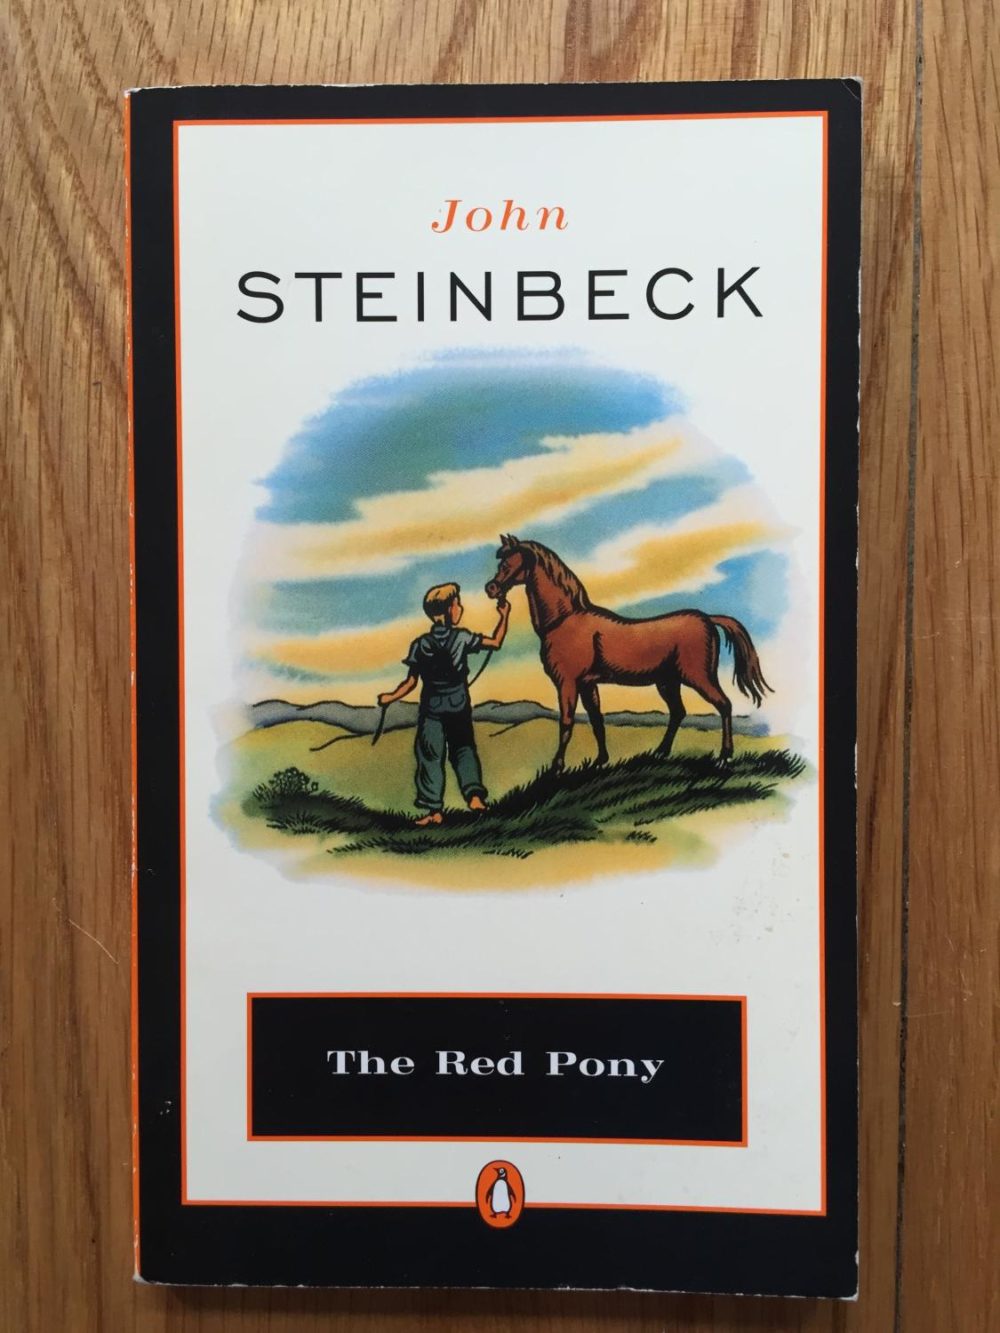 aThe Red Pony John Steinbeck